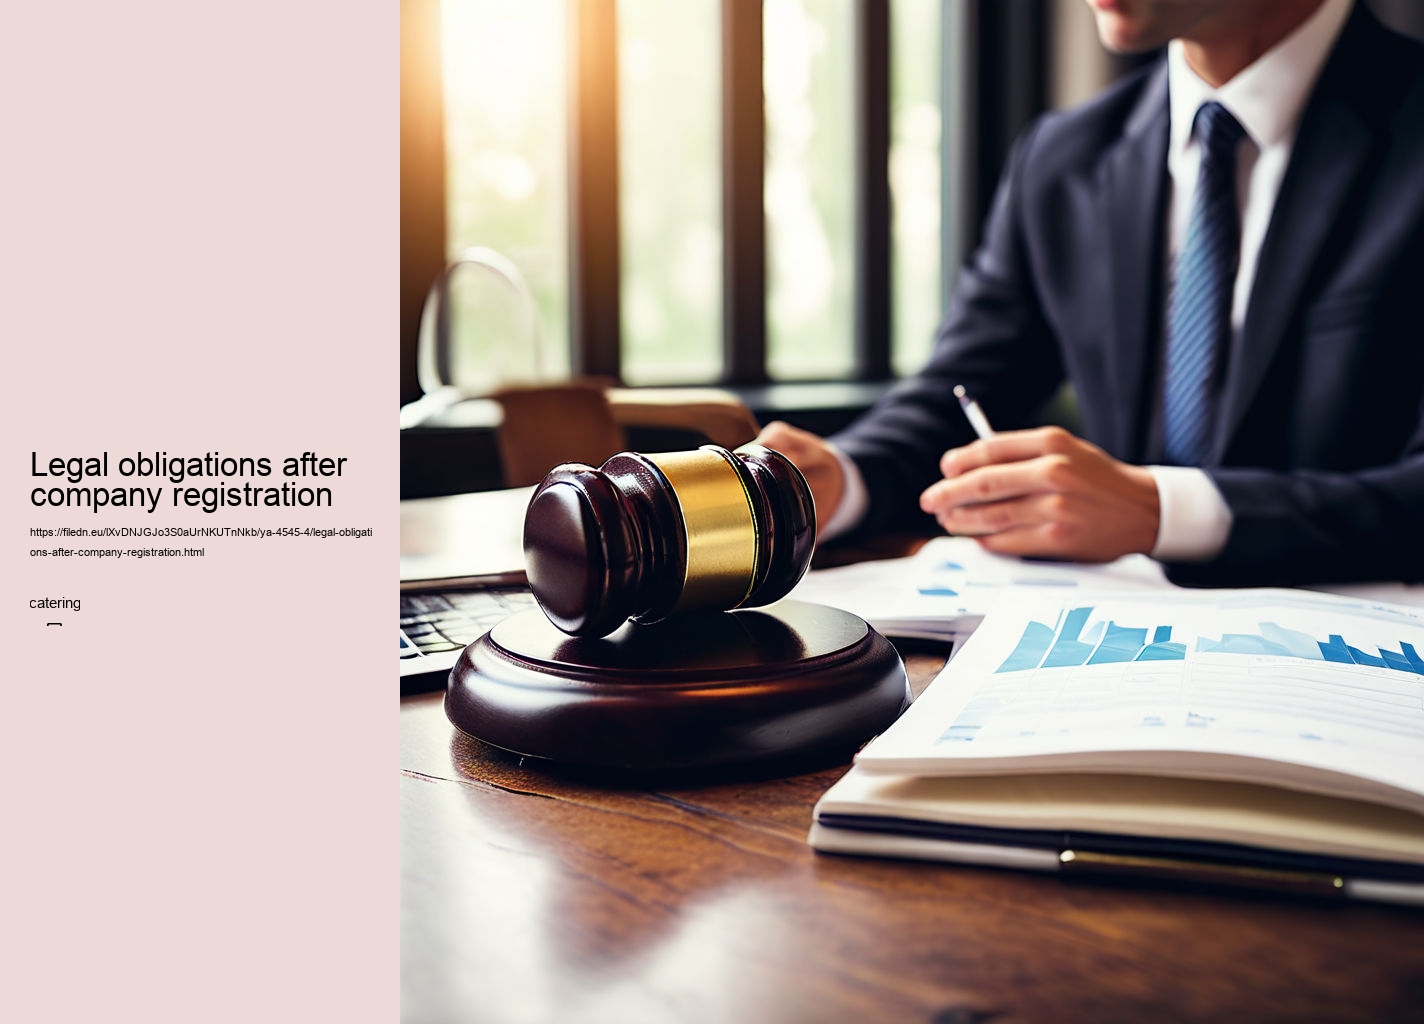 Legal obligations after company registration